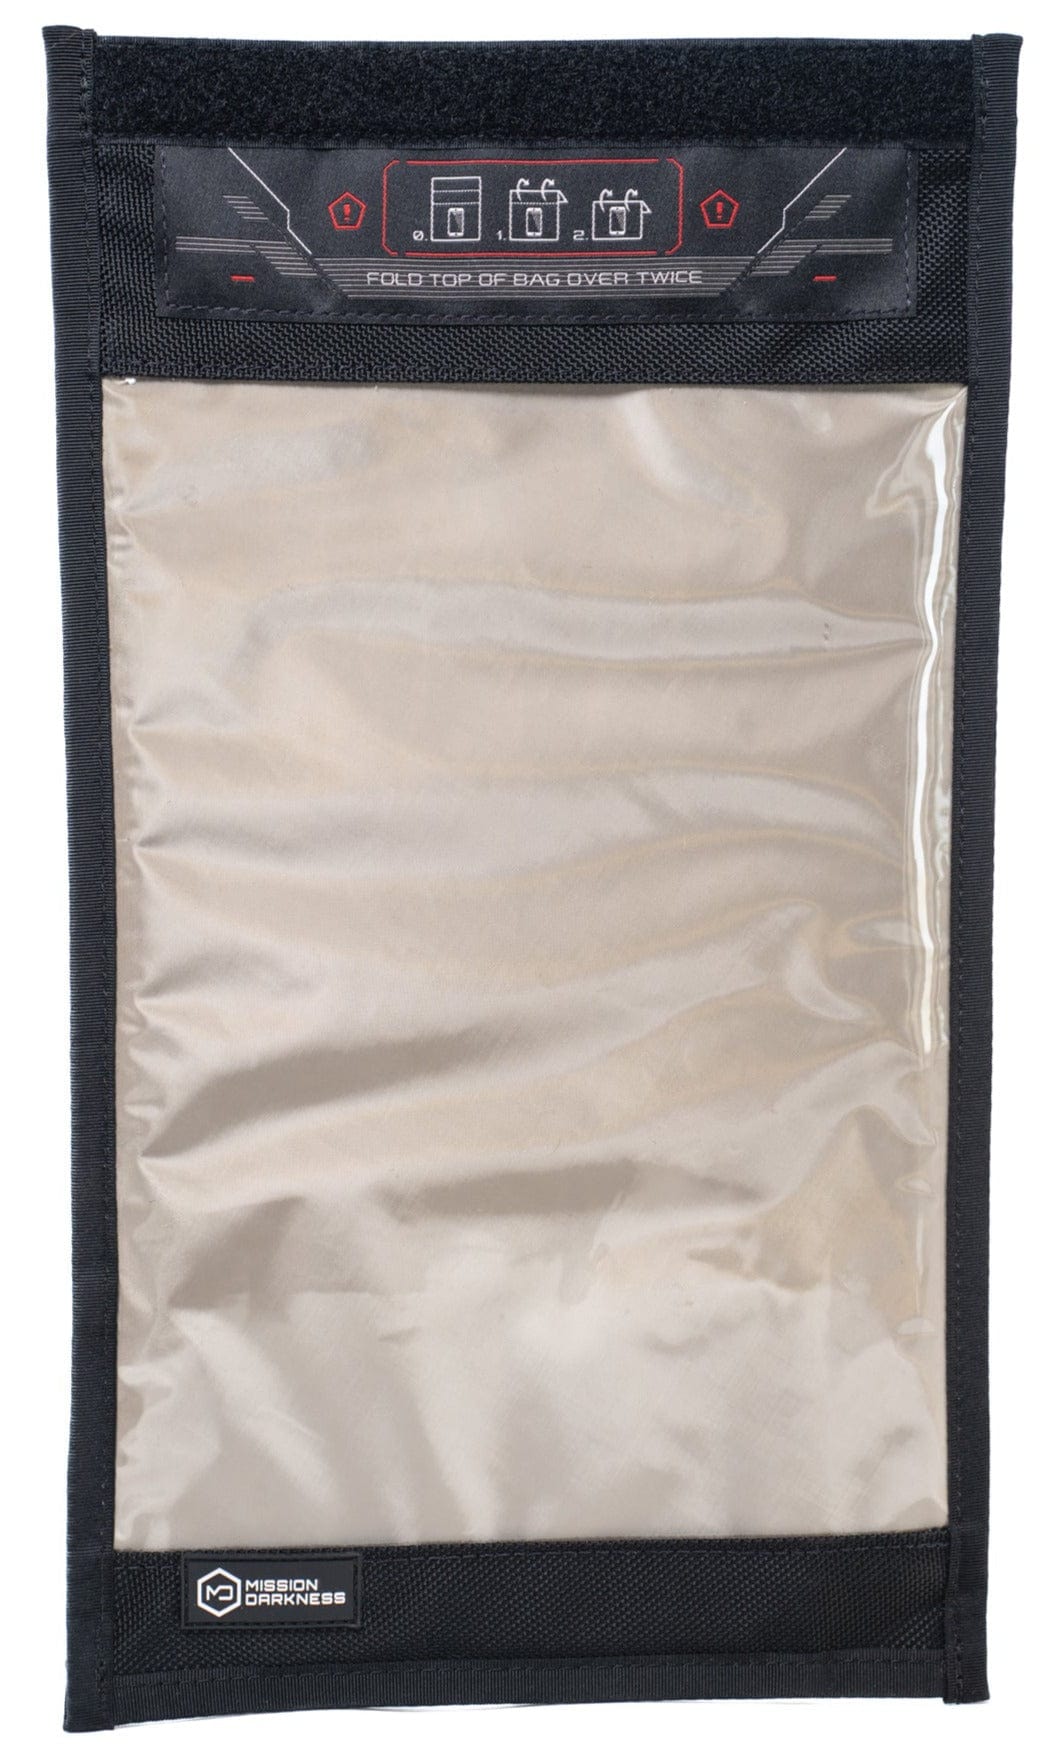 Window Faraday Bag for Tablets MOS Equipment Faraday Bags